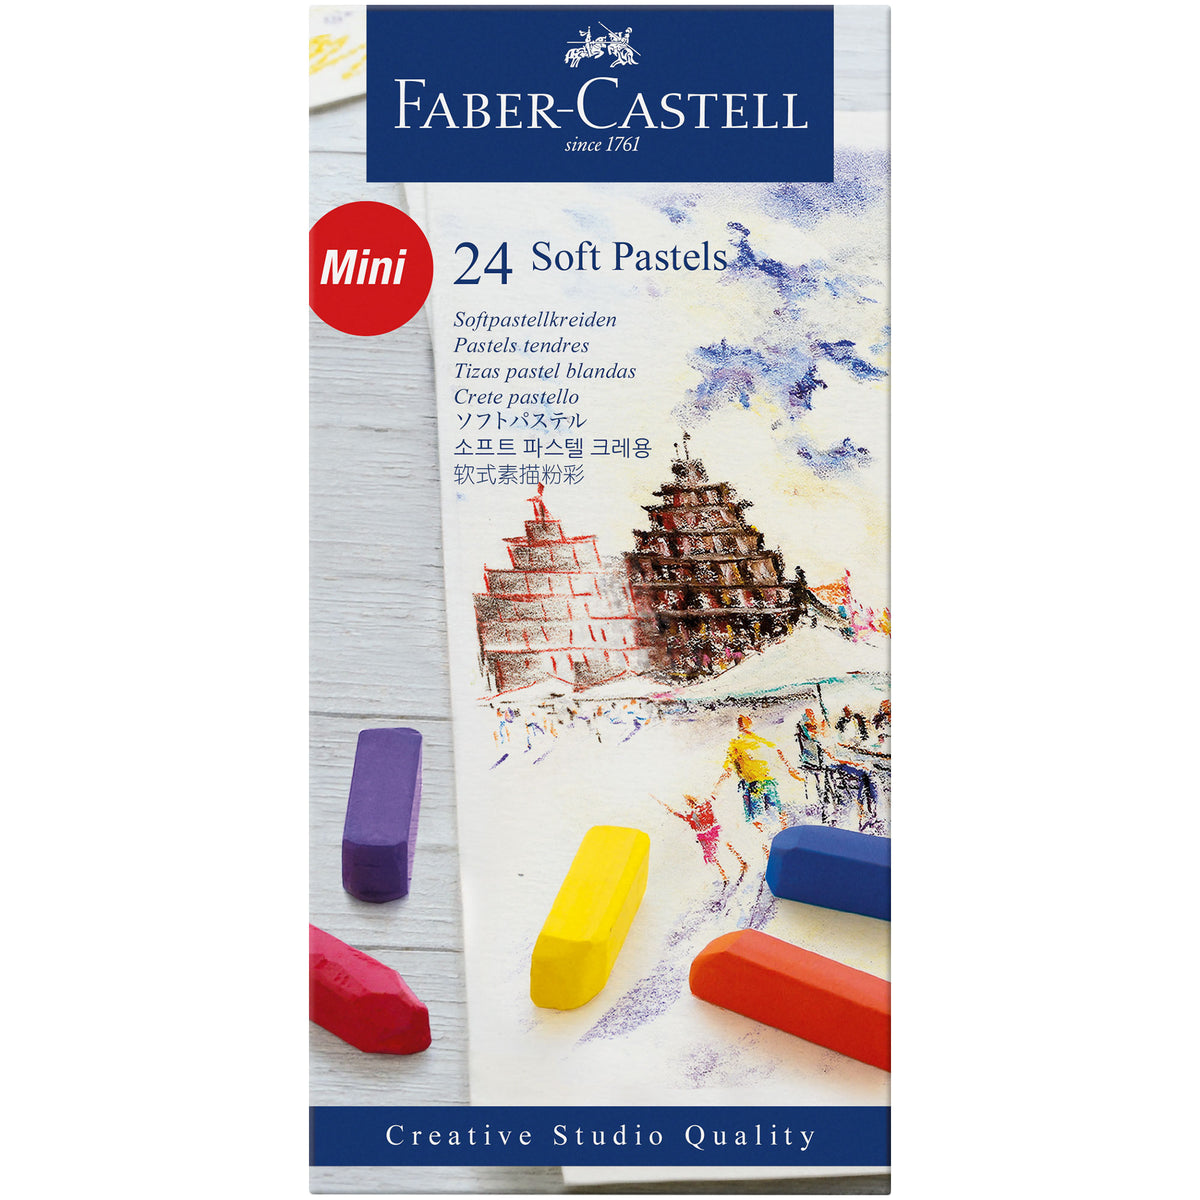 Faber-Castell Mini Soft Pastel Set of 24